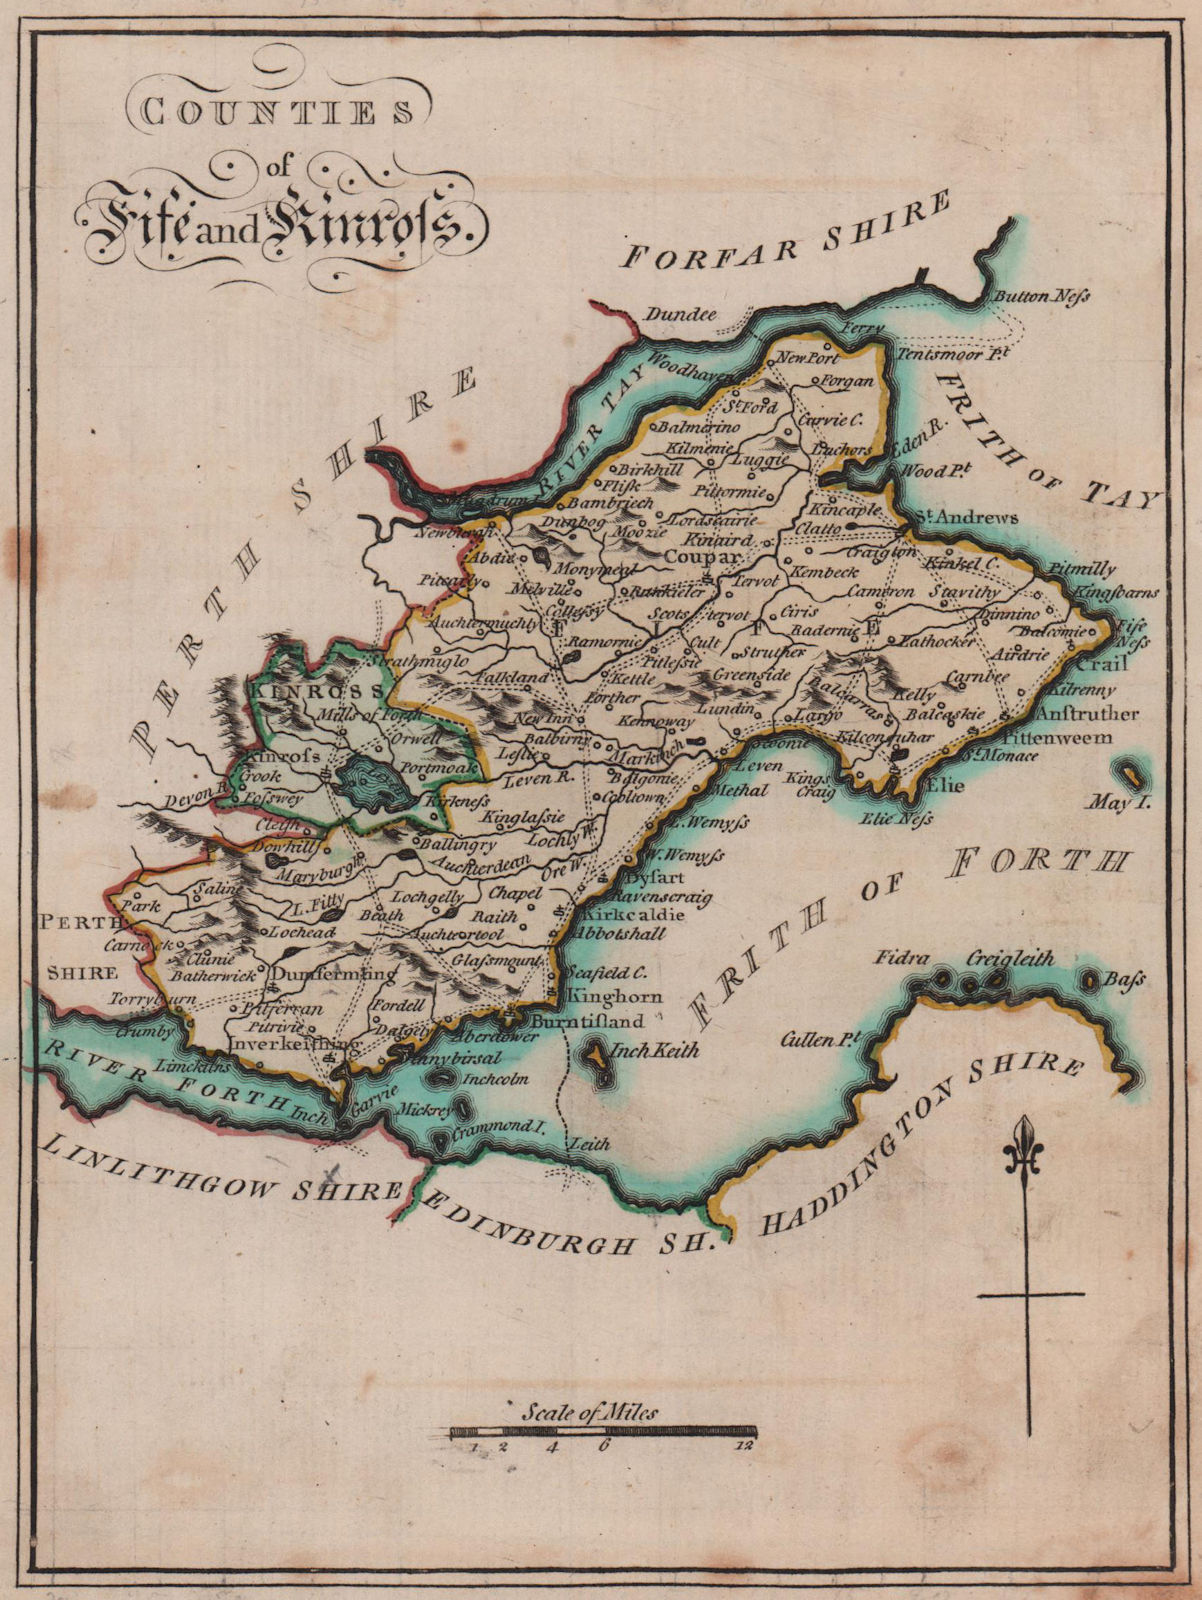 Counties of Fife and Kinross. Fife and Kinross-shire. SAYER / ARMSTRONG 1787 map